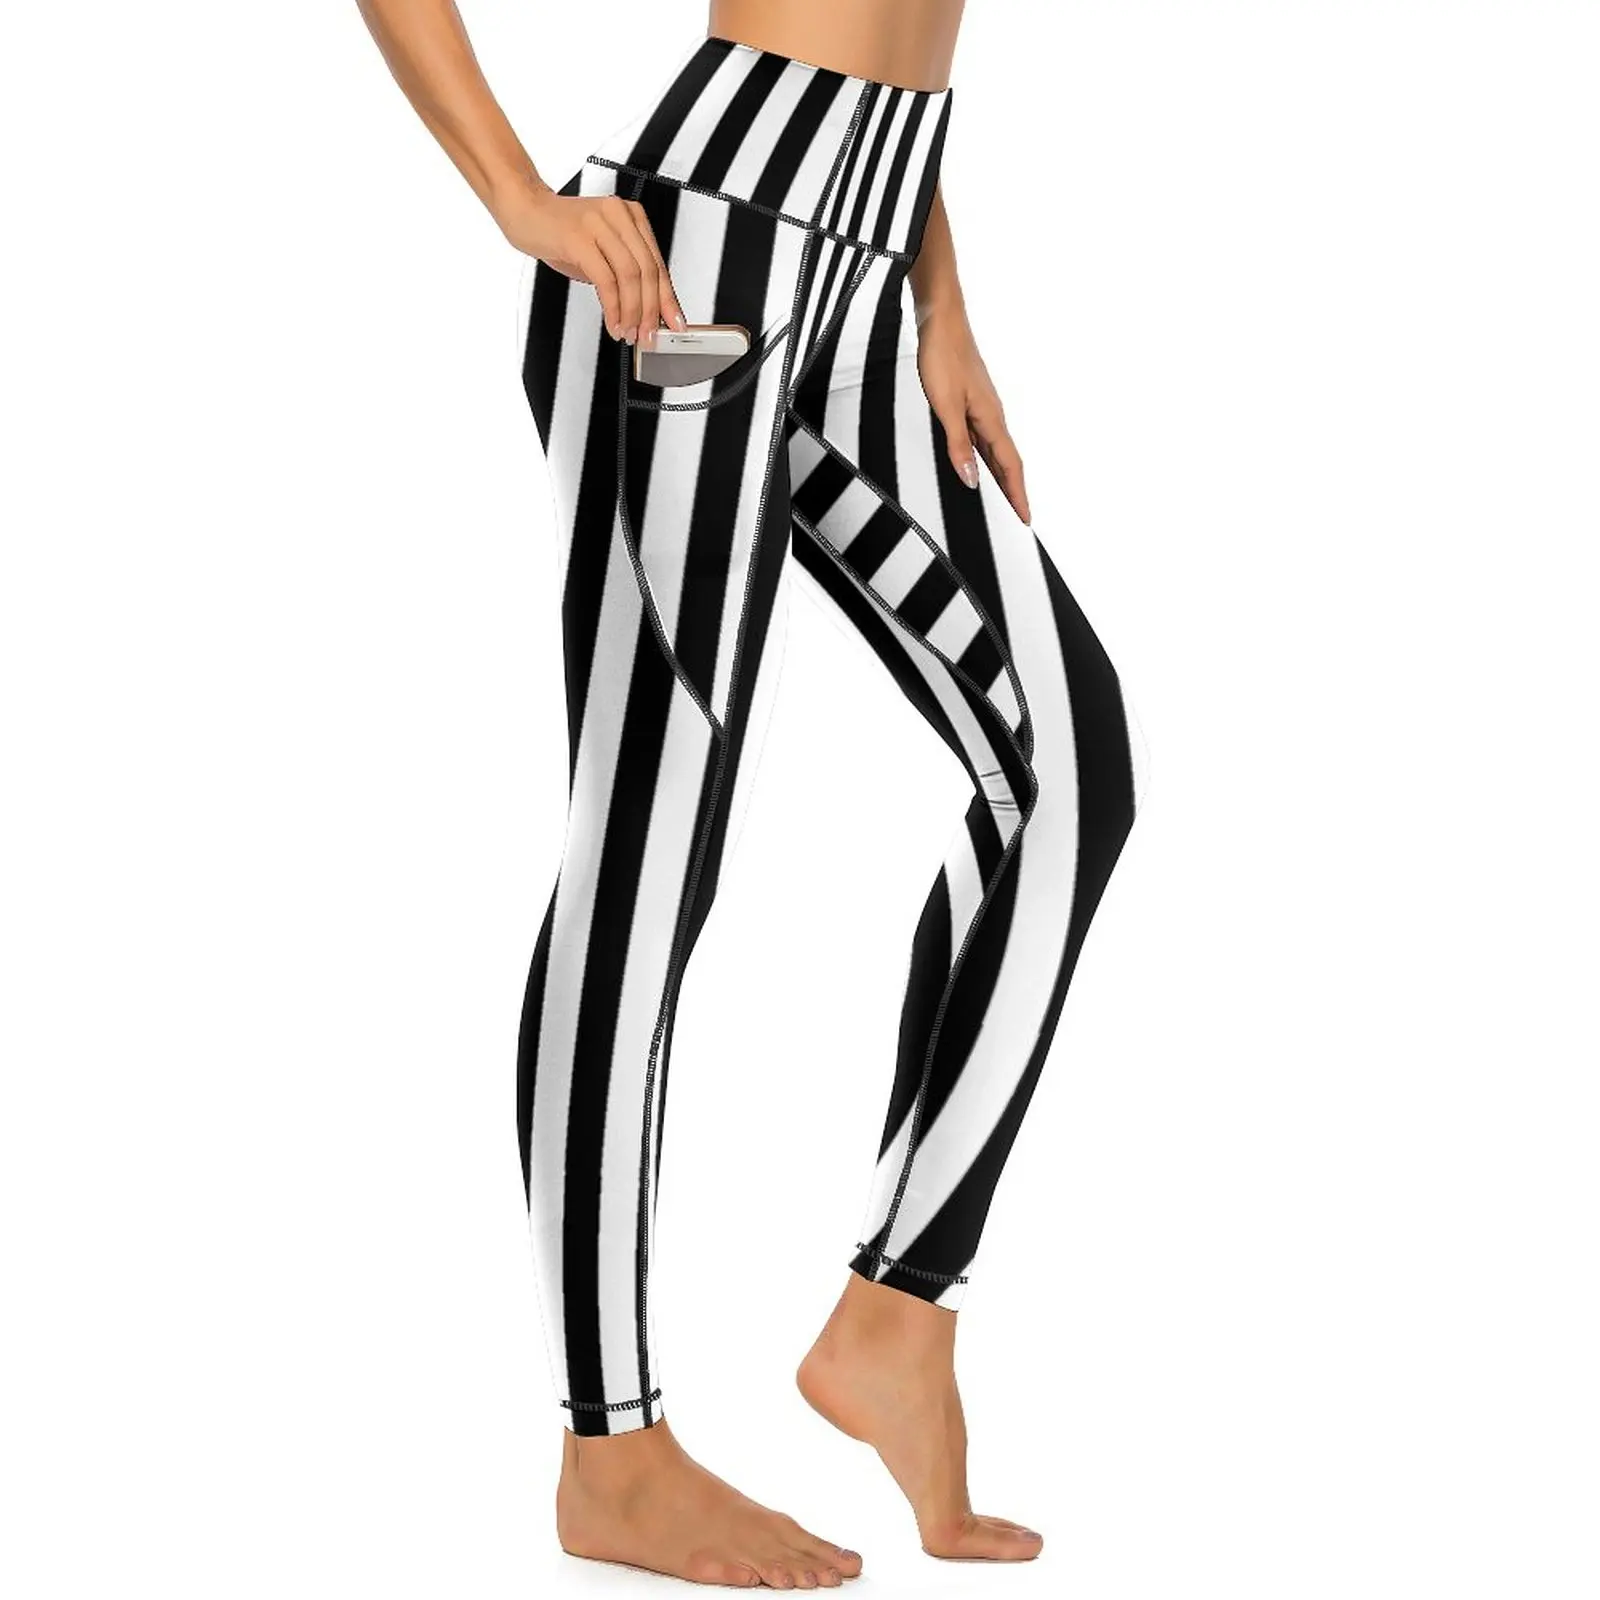 

Classic Striped Leggings Sexy Black White Stripes Workout Yoga Pants High Waist Stretchy Sports Tights Retro Pattern Leggins